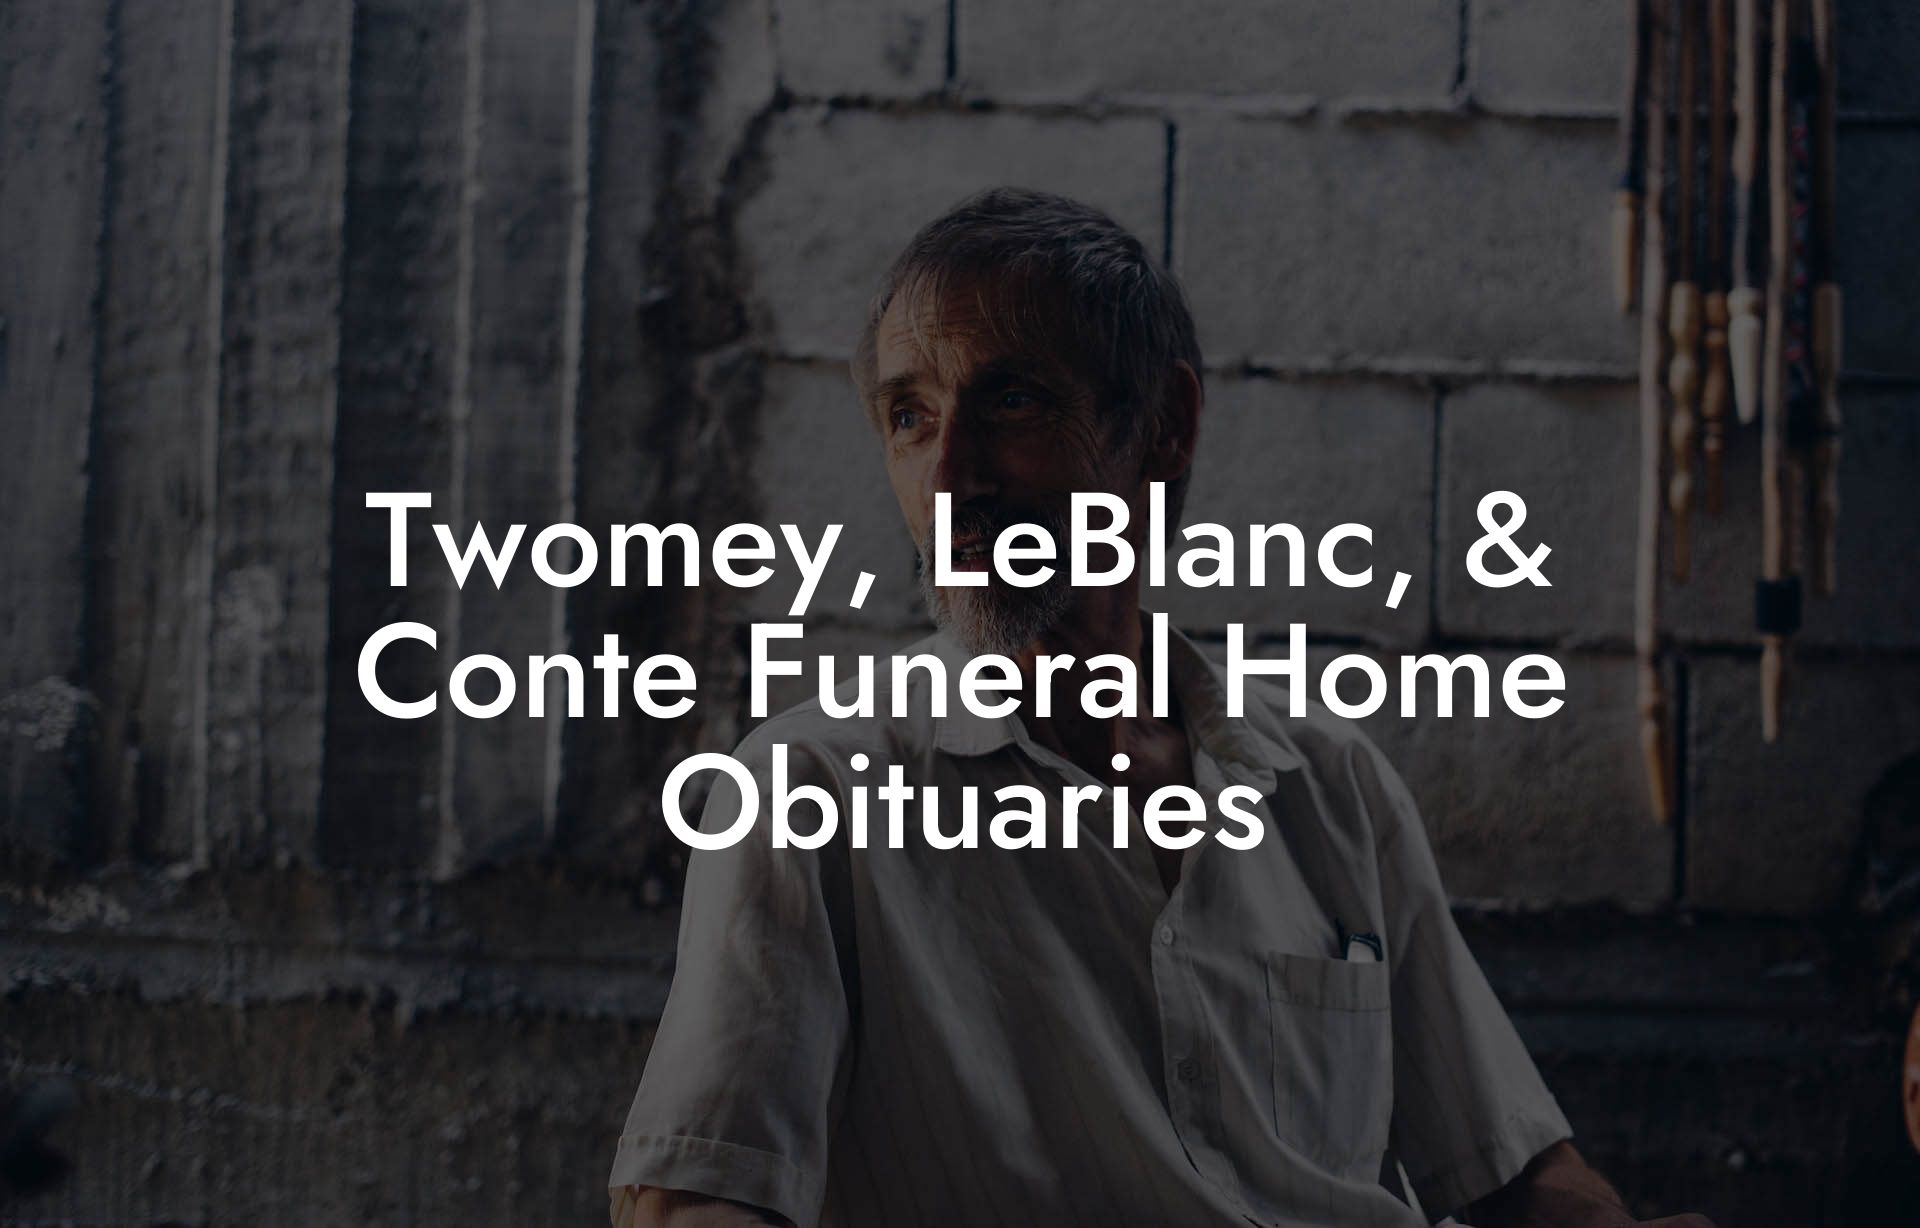 Twomey, LeBlanc, & Conte Funeral Home Obituaries